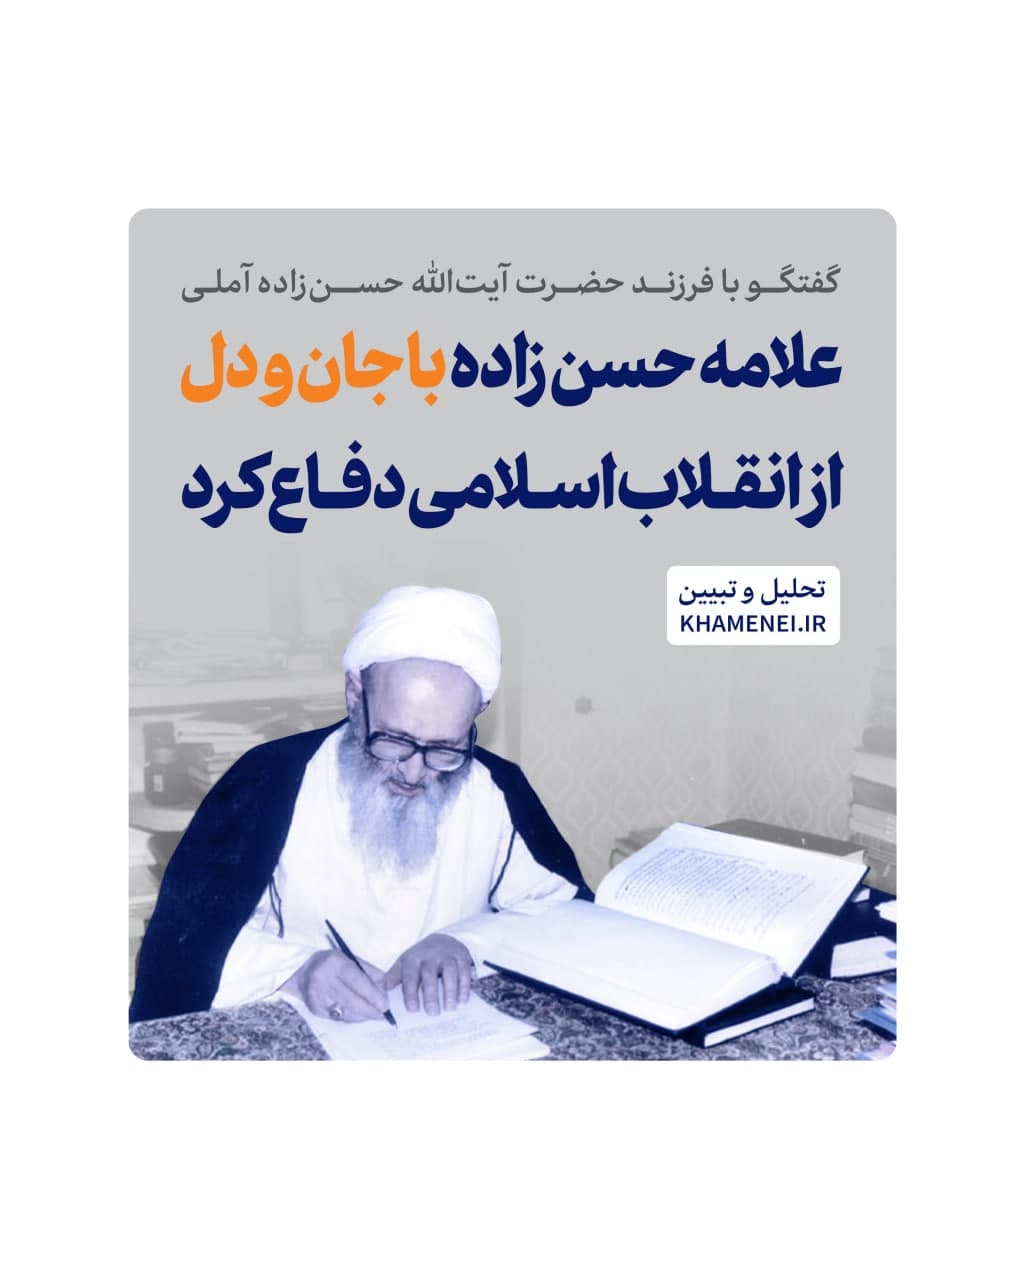 https://idc0-cdn0.khamenei.ir/ndata/news/48771/photo_2021-10-02_22-28-10.jpg